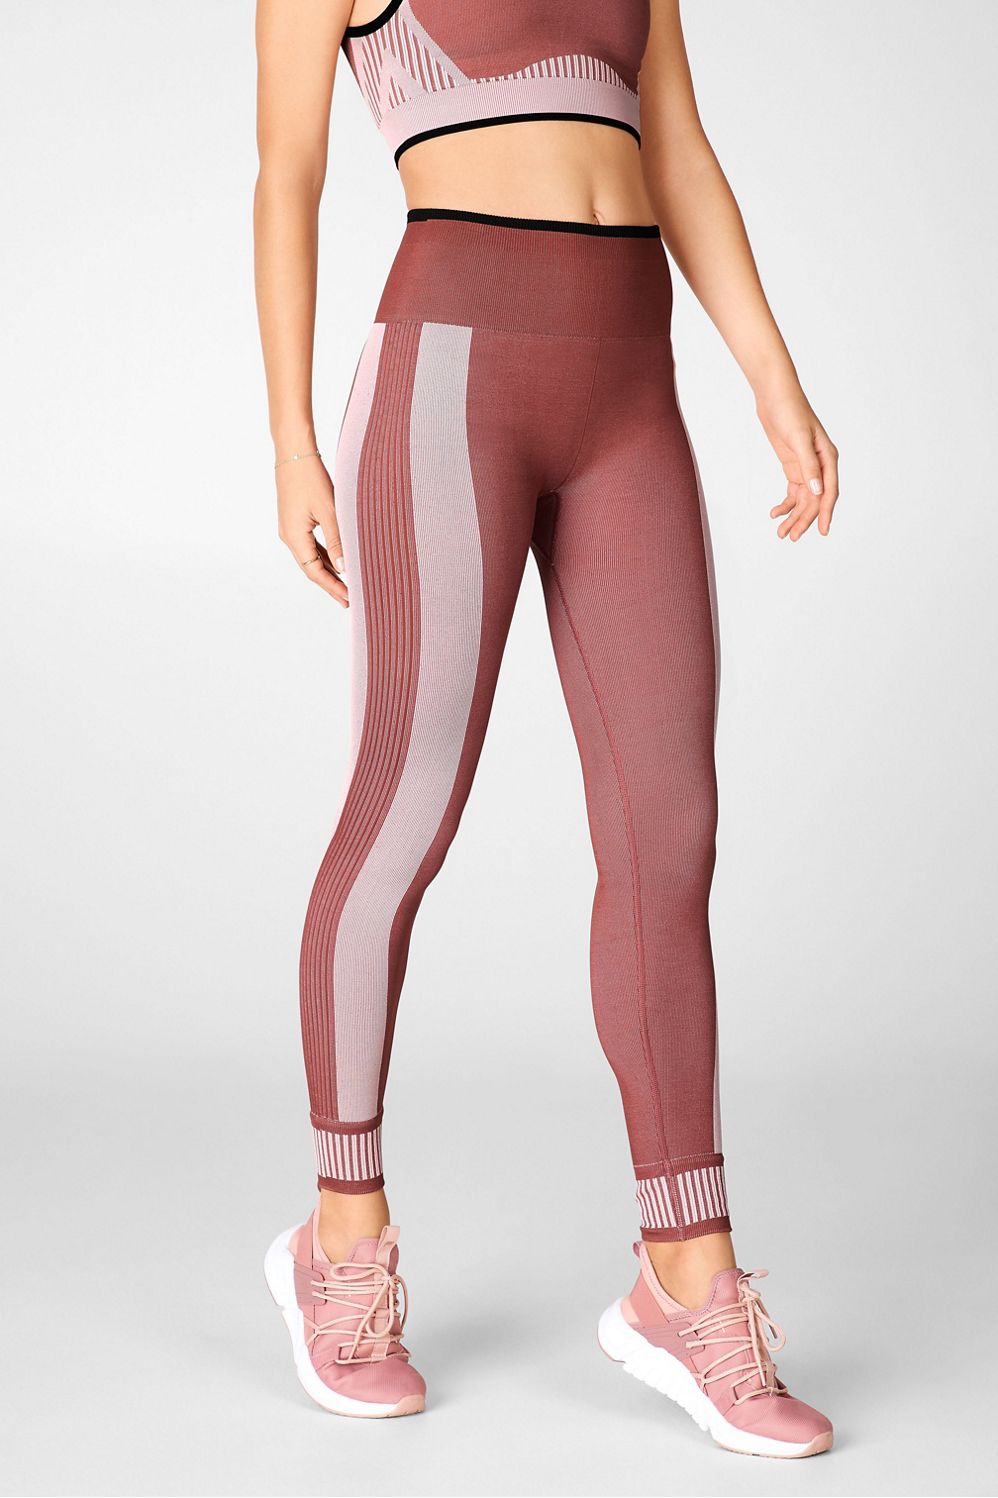 PINK Victoria's Secret Colorblock Yoga Leggings  Leggings are not pants,  Color block leggings, Best leggings